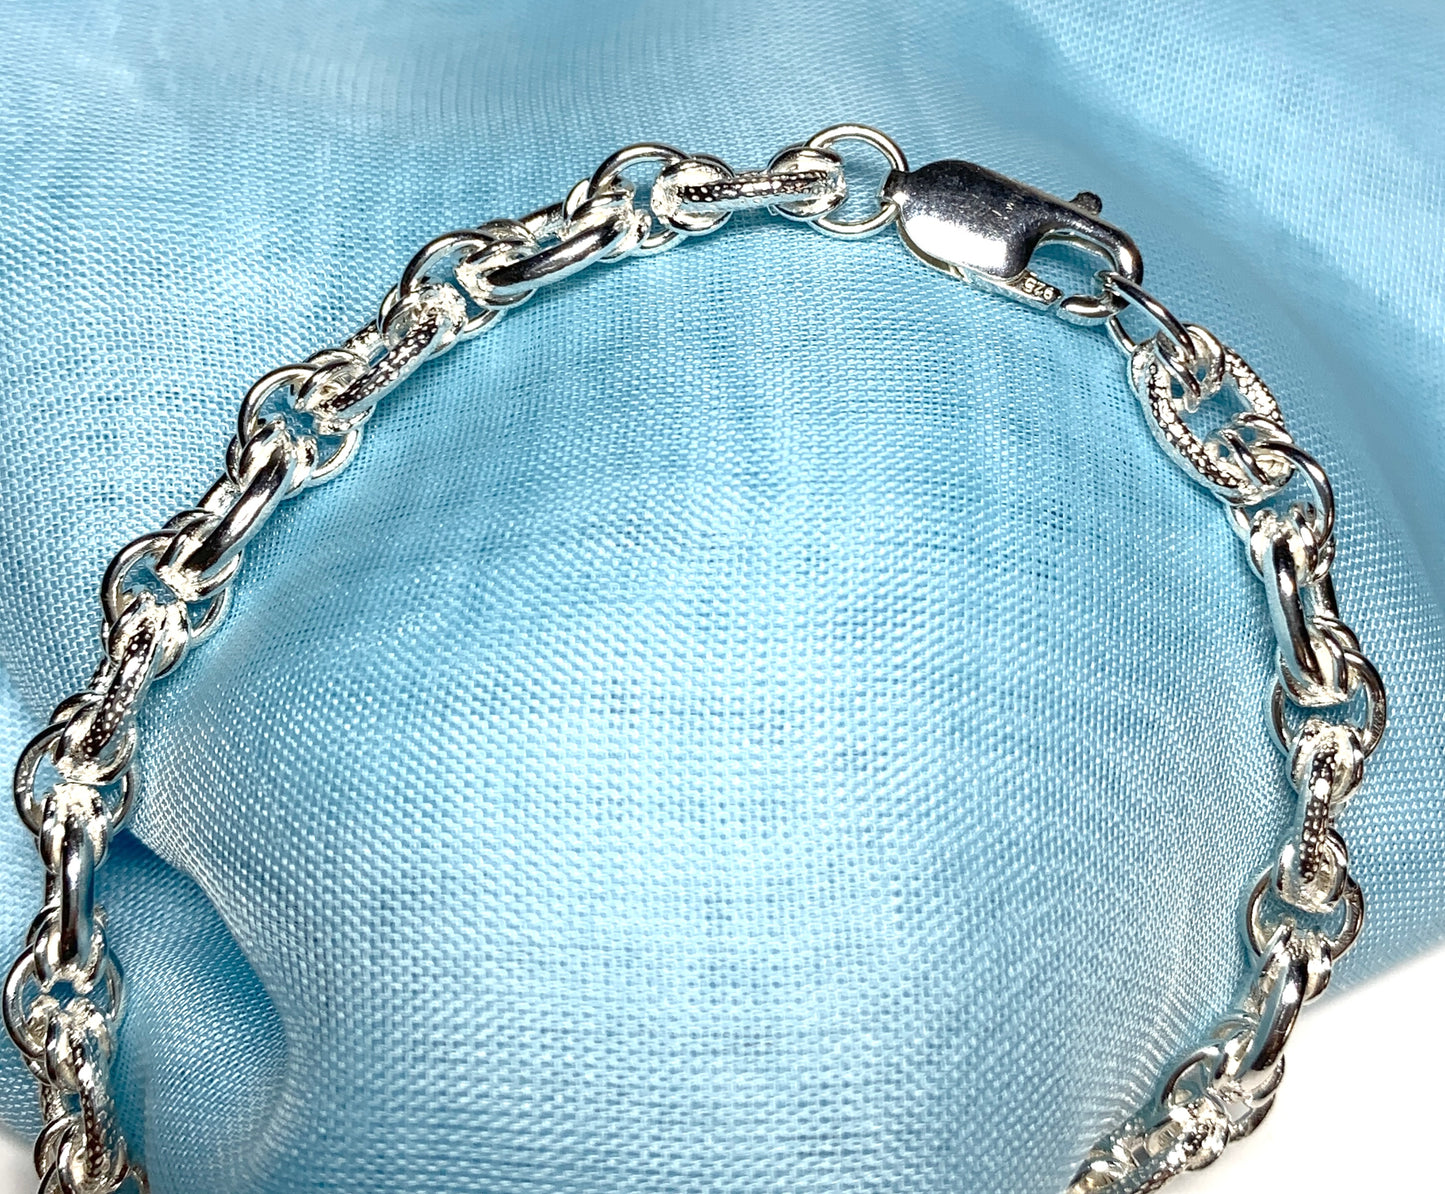 Ladies sterling silver bracelet fancy patterned solid link